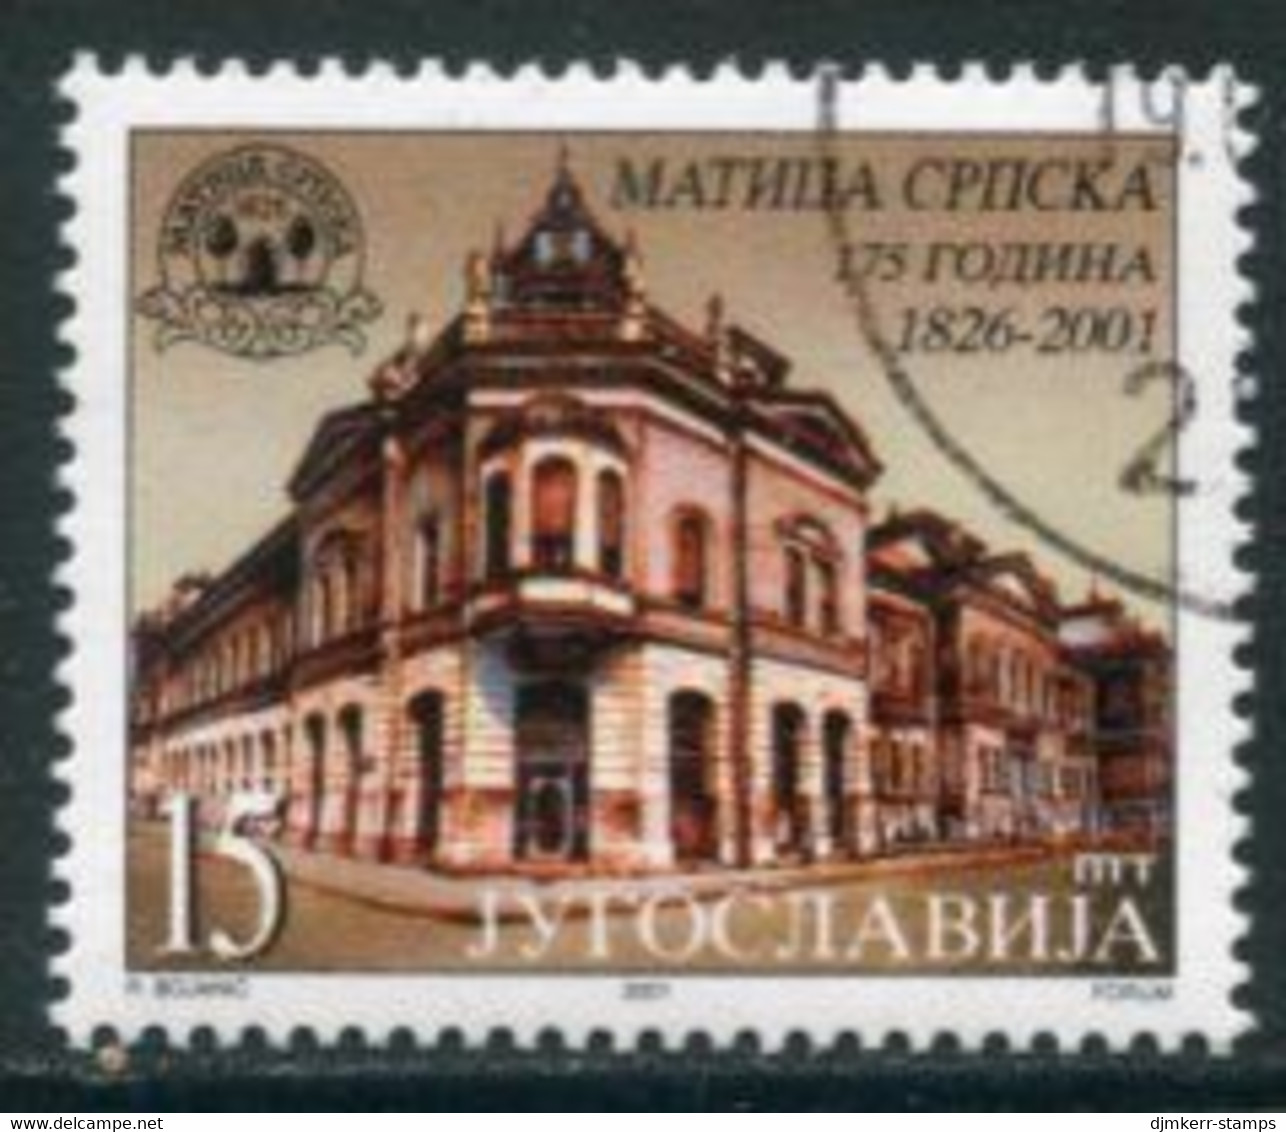 YUGOSLAVIA 2001 Matica Srpska Literary Association Used.  Michel 3012 - Oblitérés